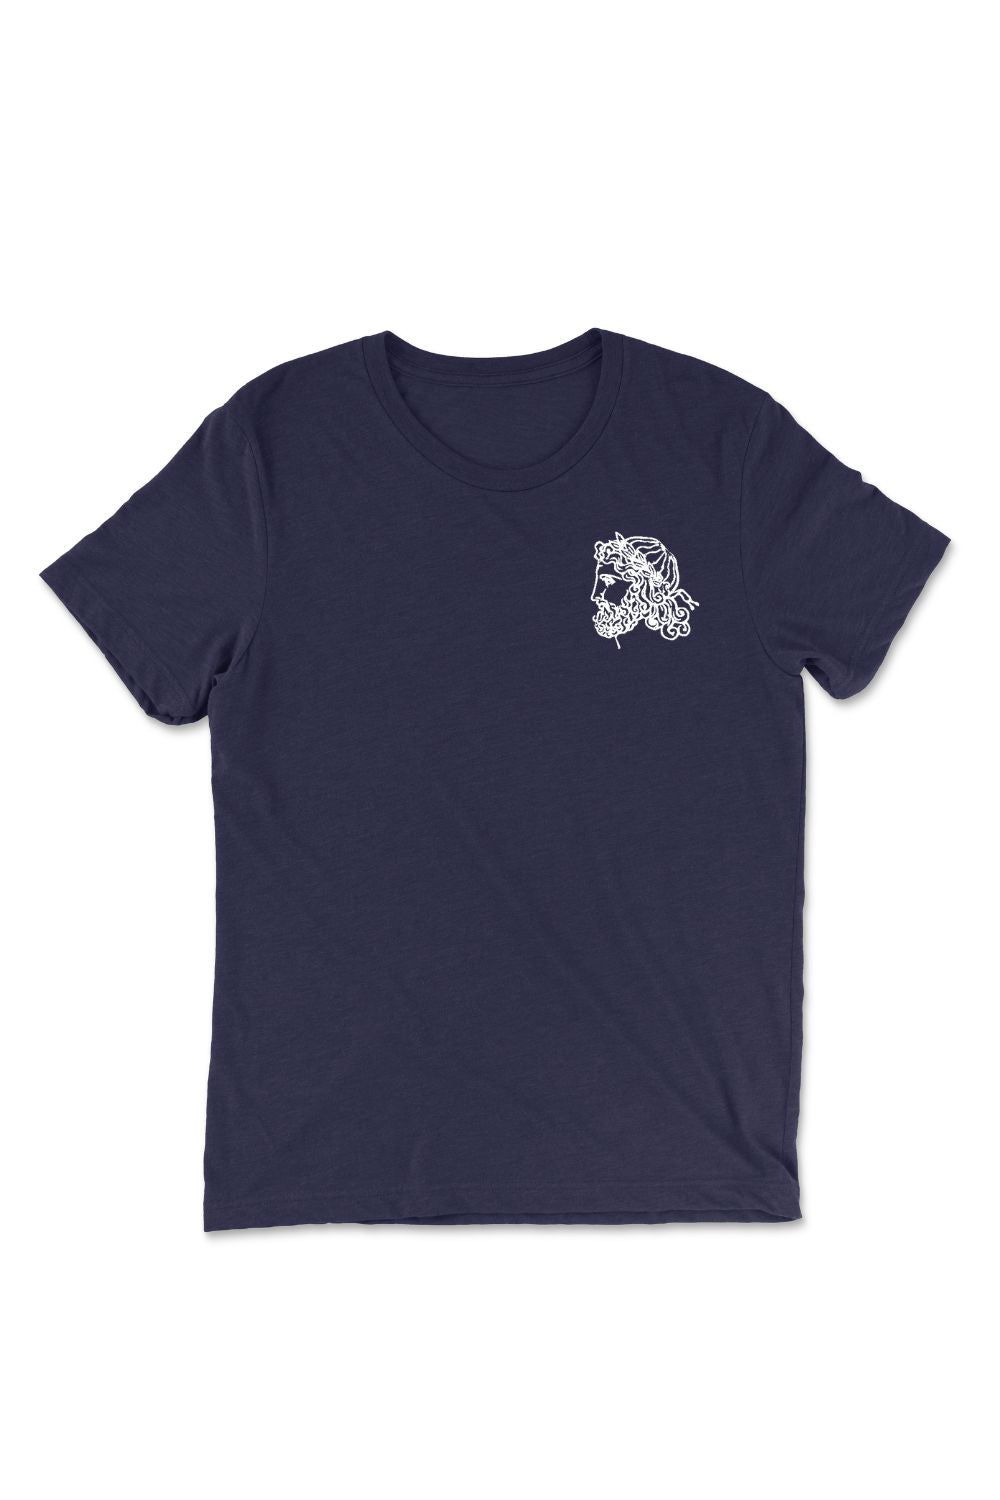 Pheidippides Marathon T-Shirt